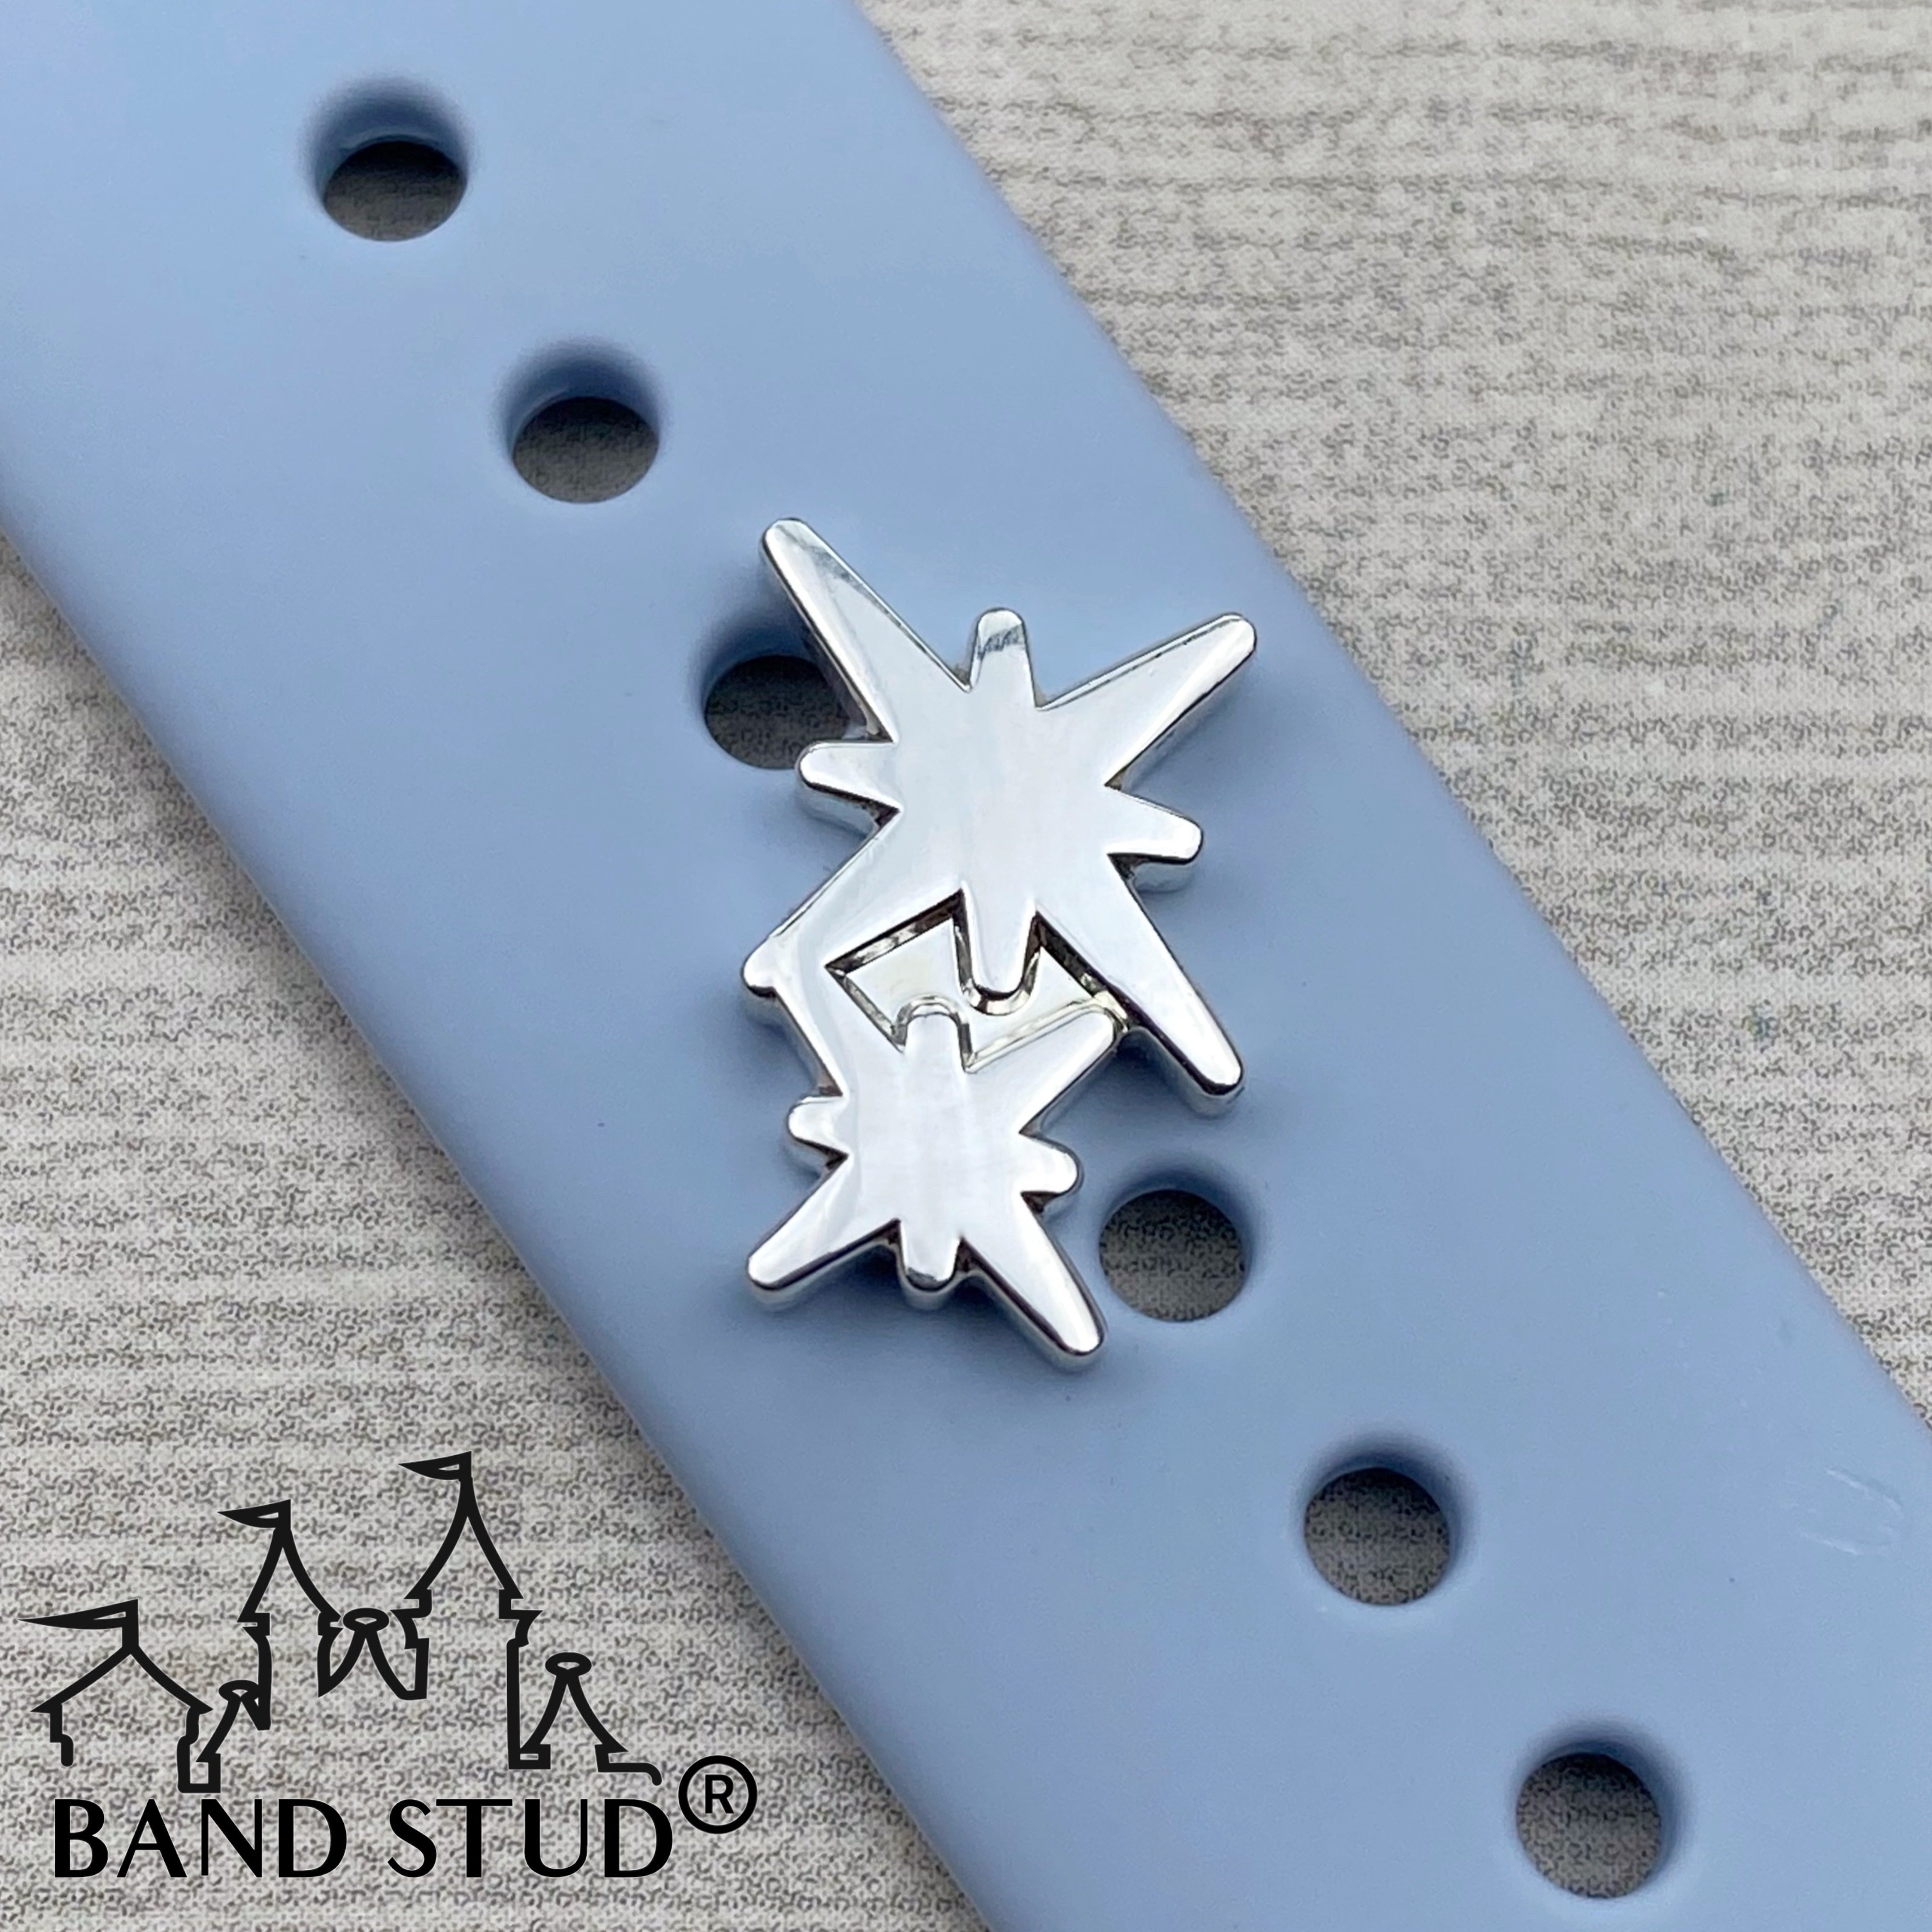 Band Stud® - Pixie dust